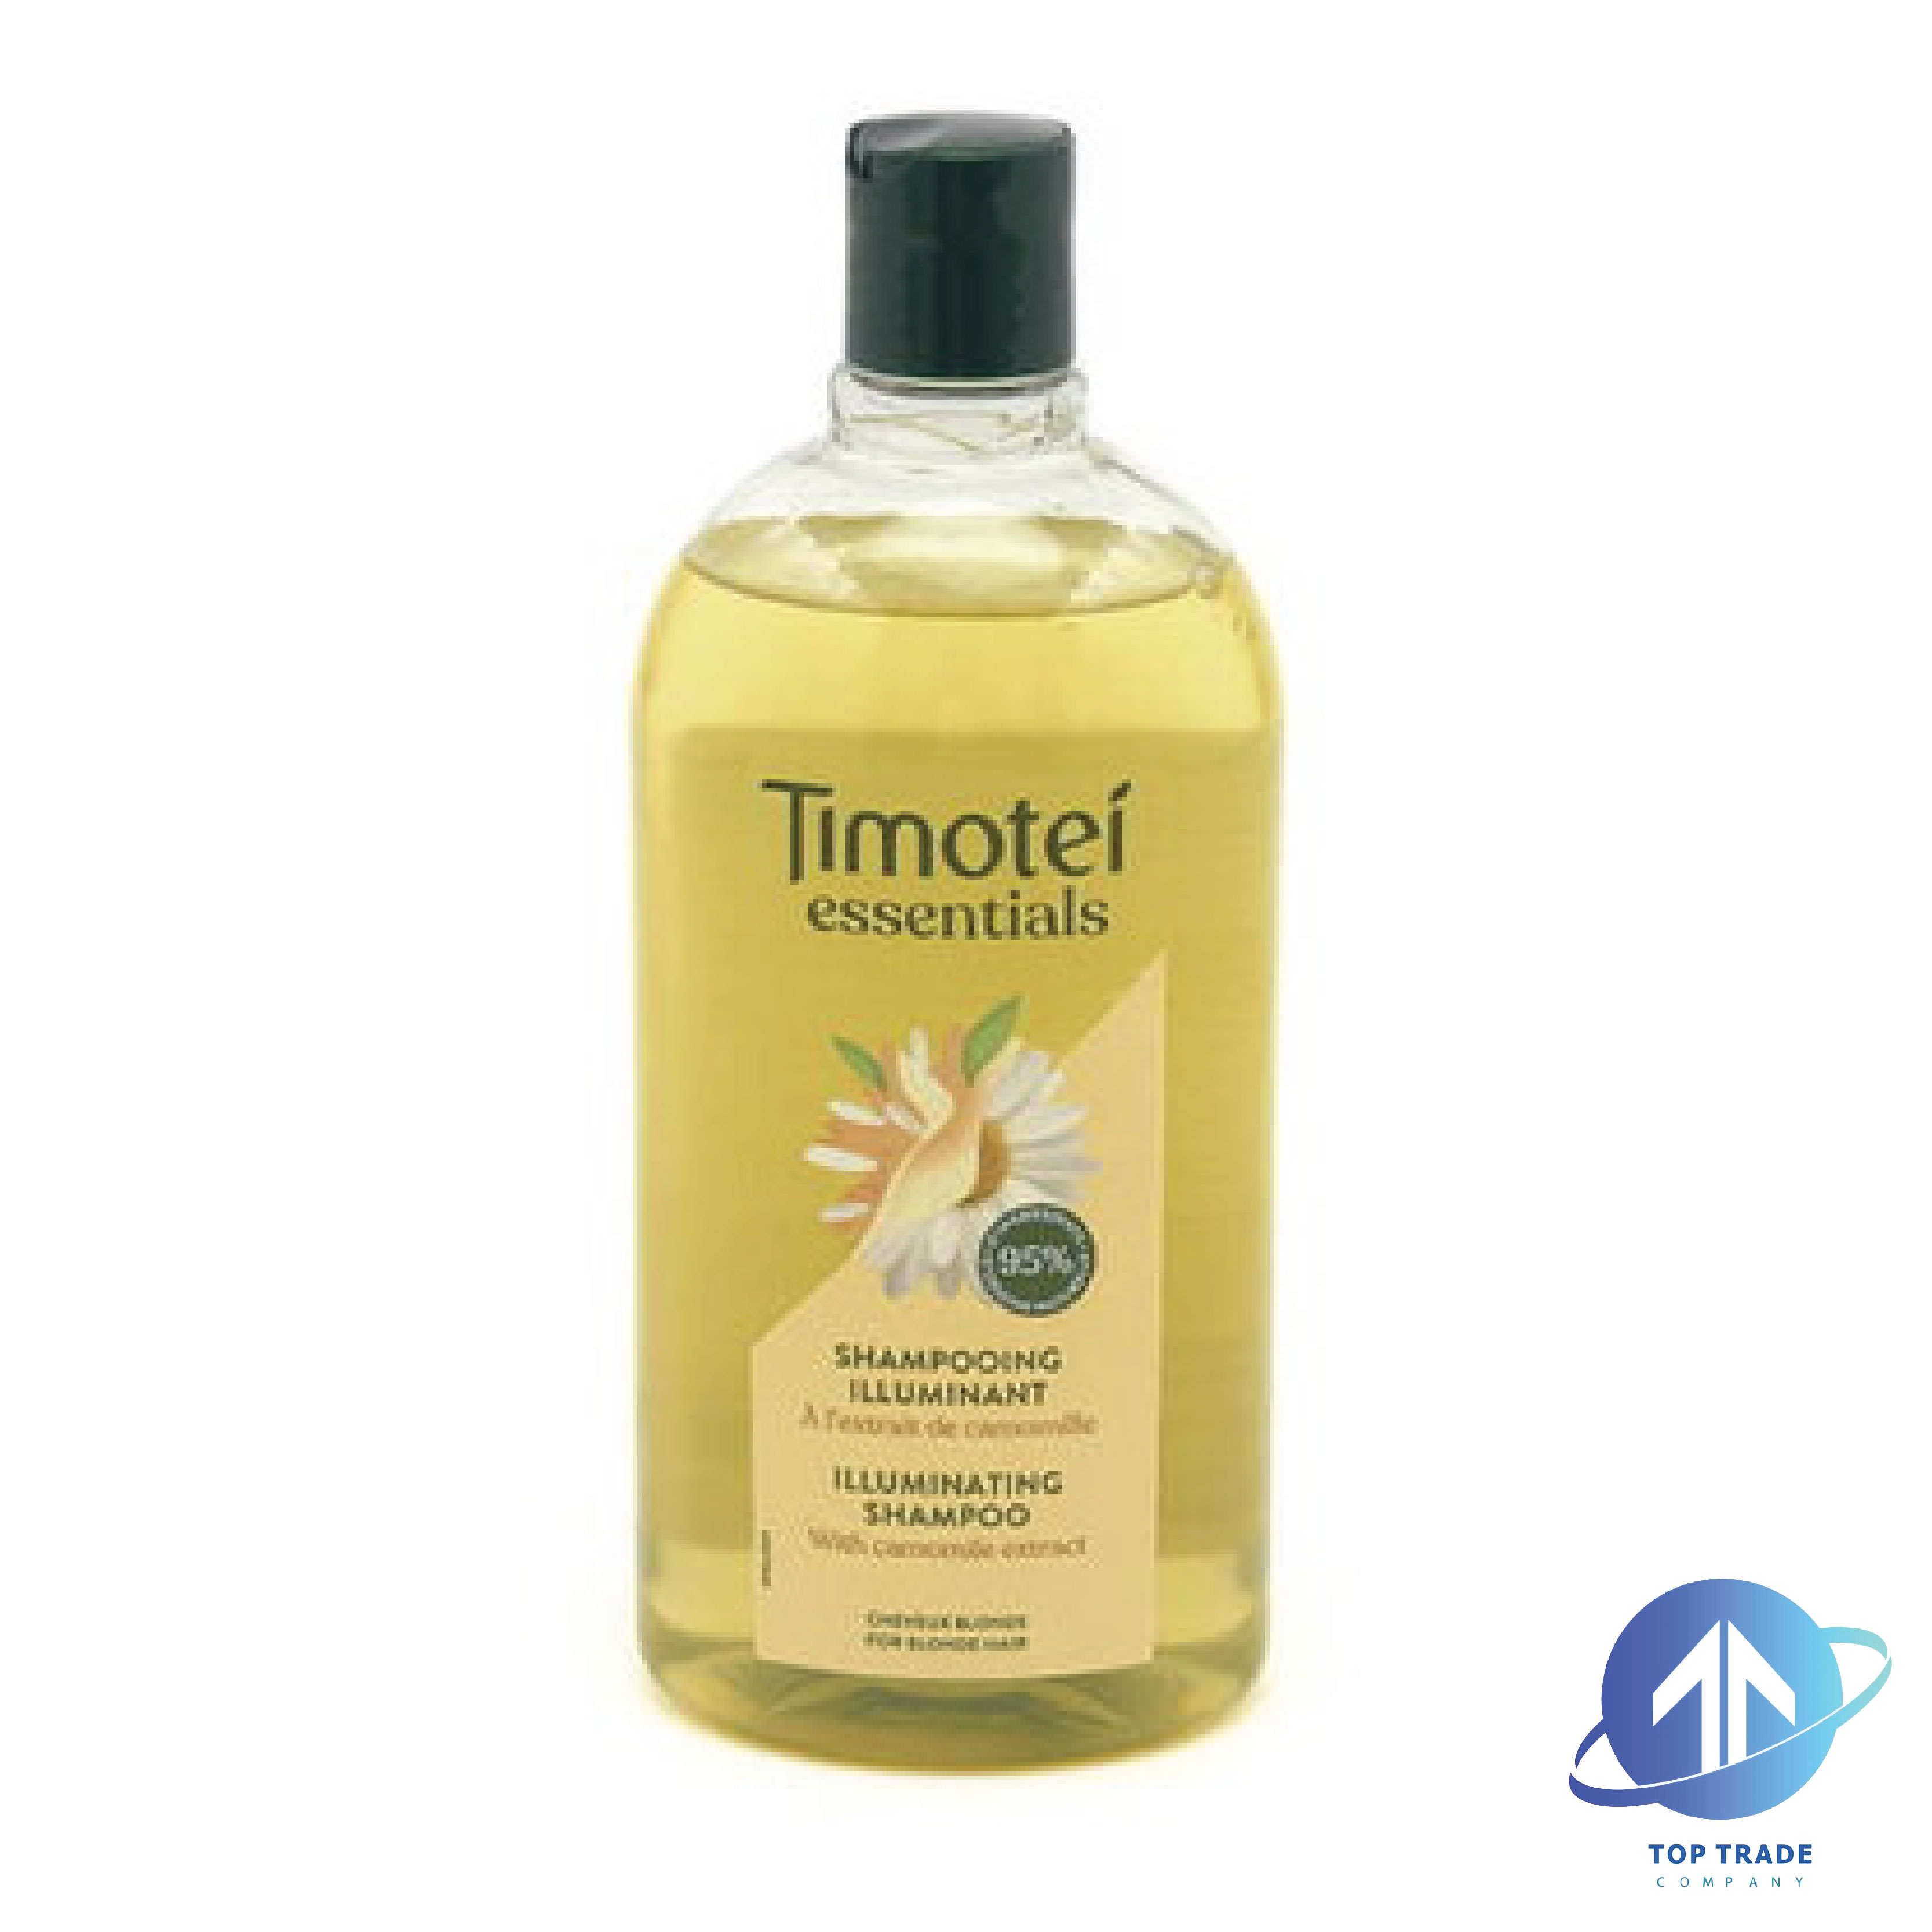 Timotei shampoo Illuminating with chamomile extract 750ml